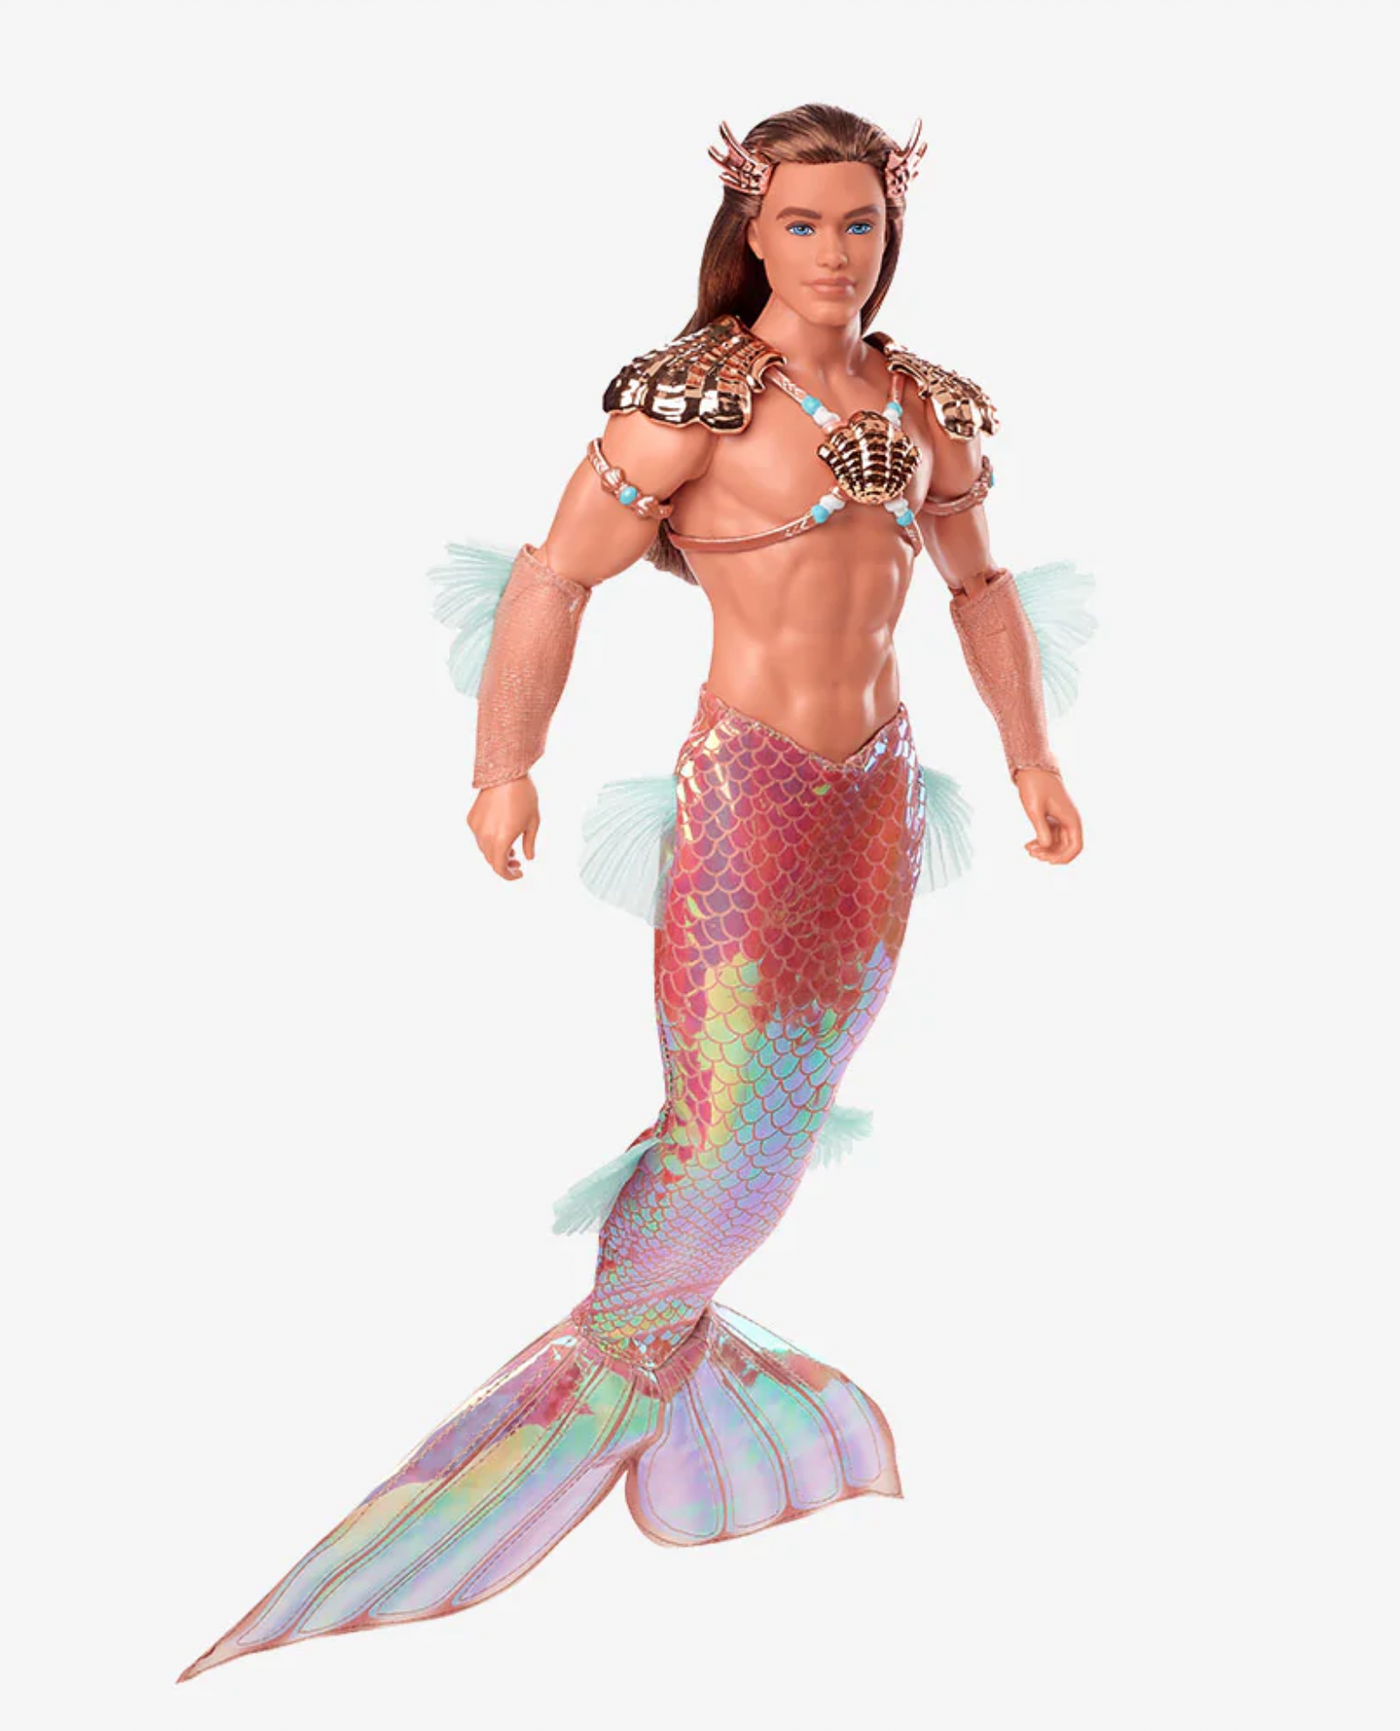 Mattel Creations Barbie Signature King Ocean Ken Merman Doll New with Box